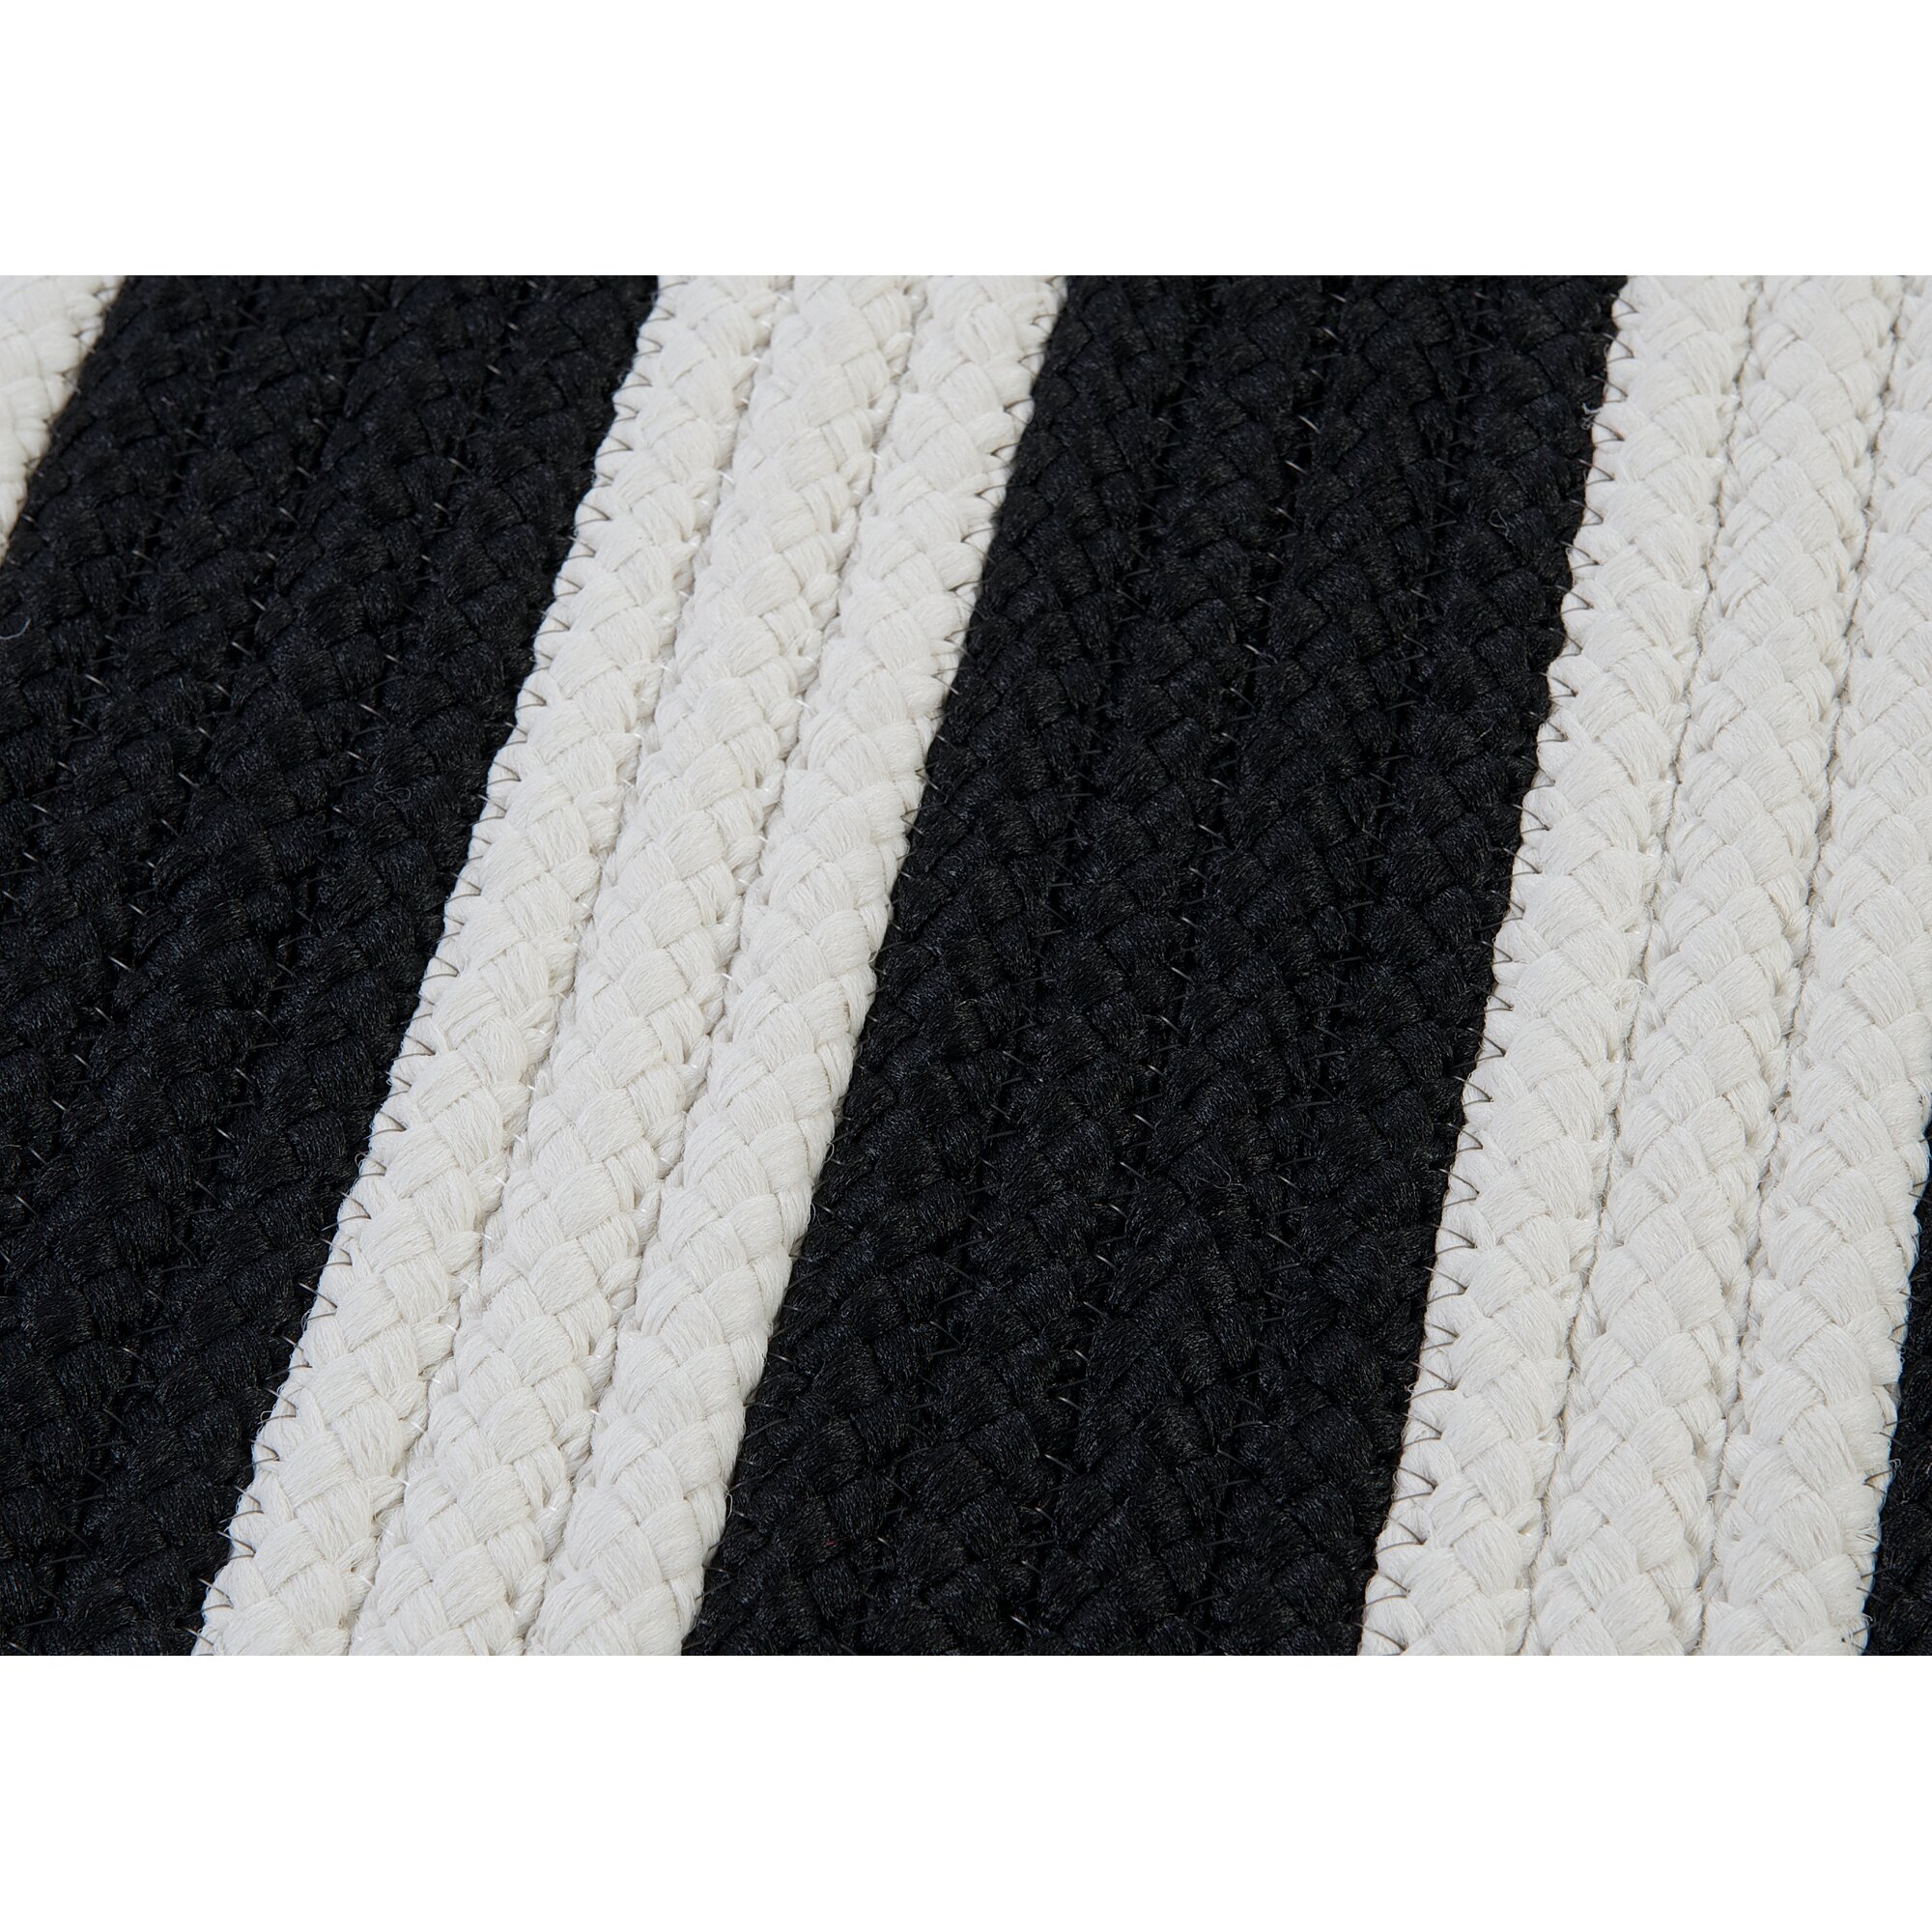 Nuloom Zebra Print Blackwhite Area Rug Nantucket Striped